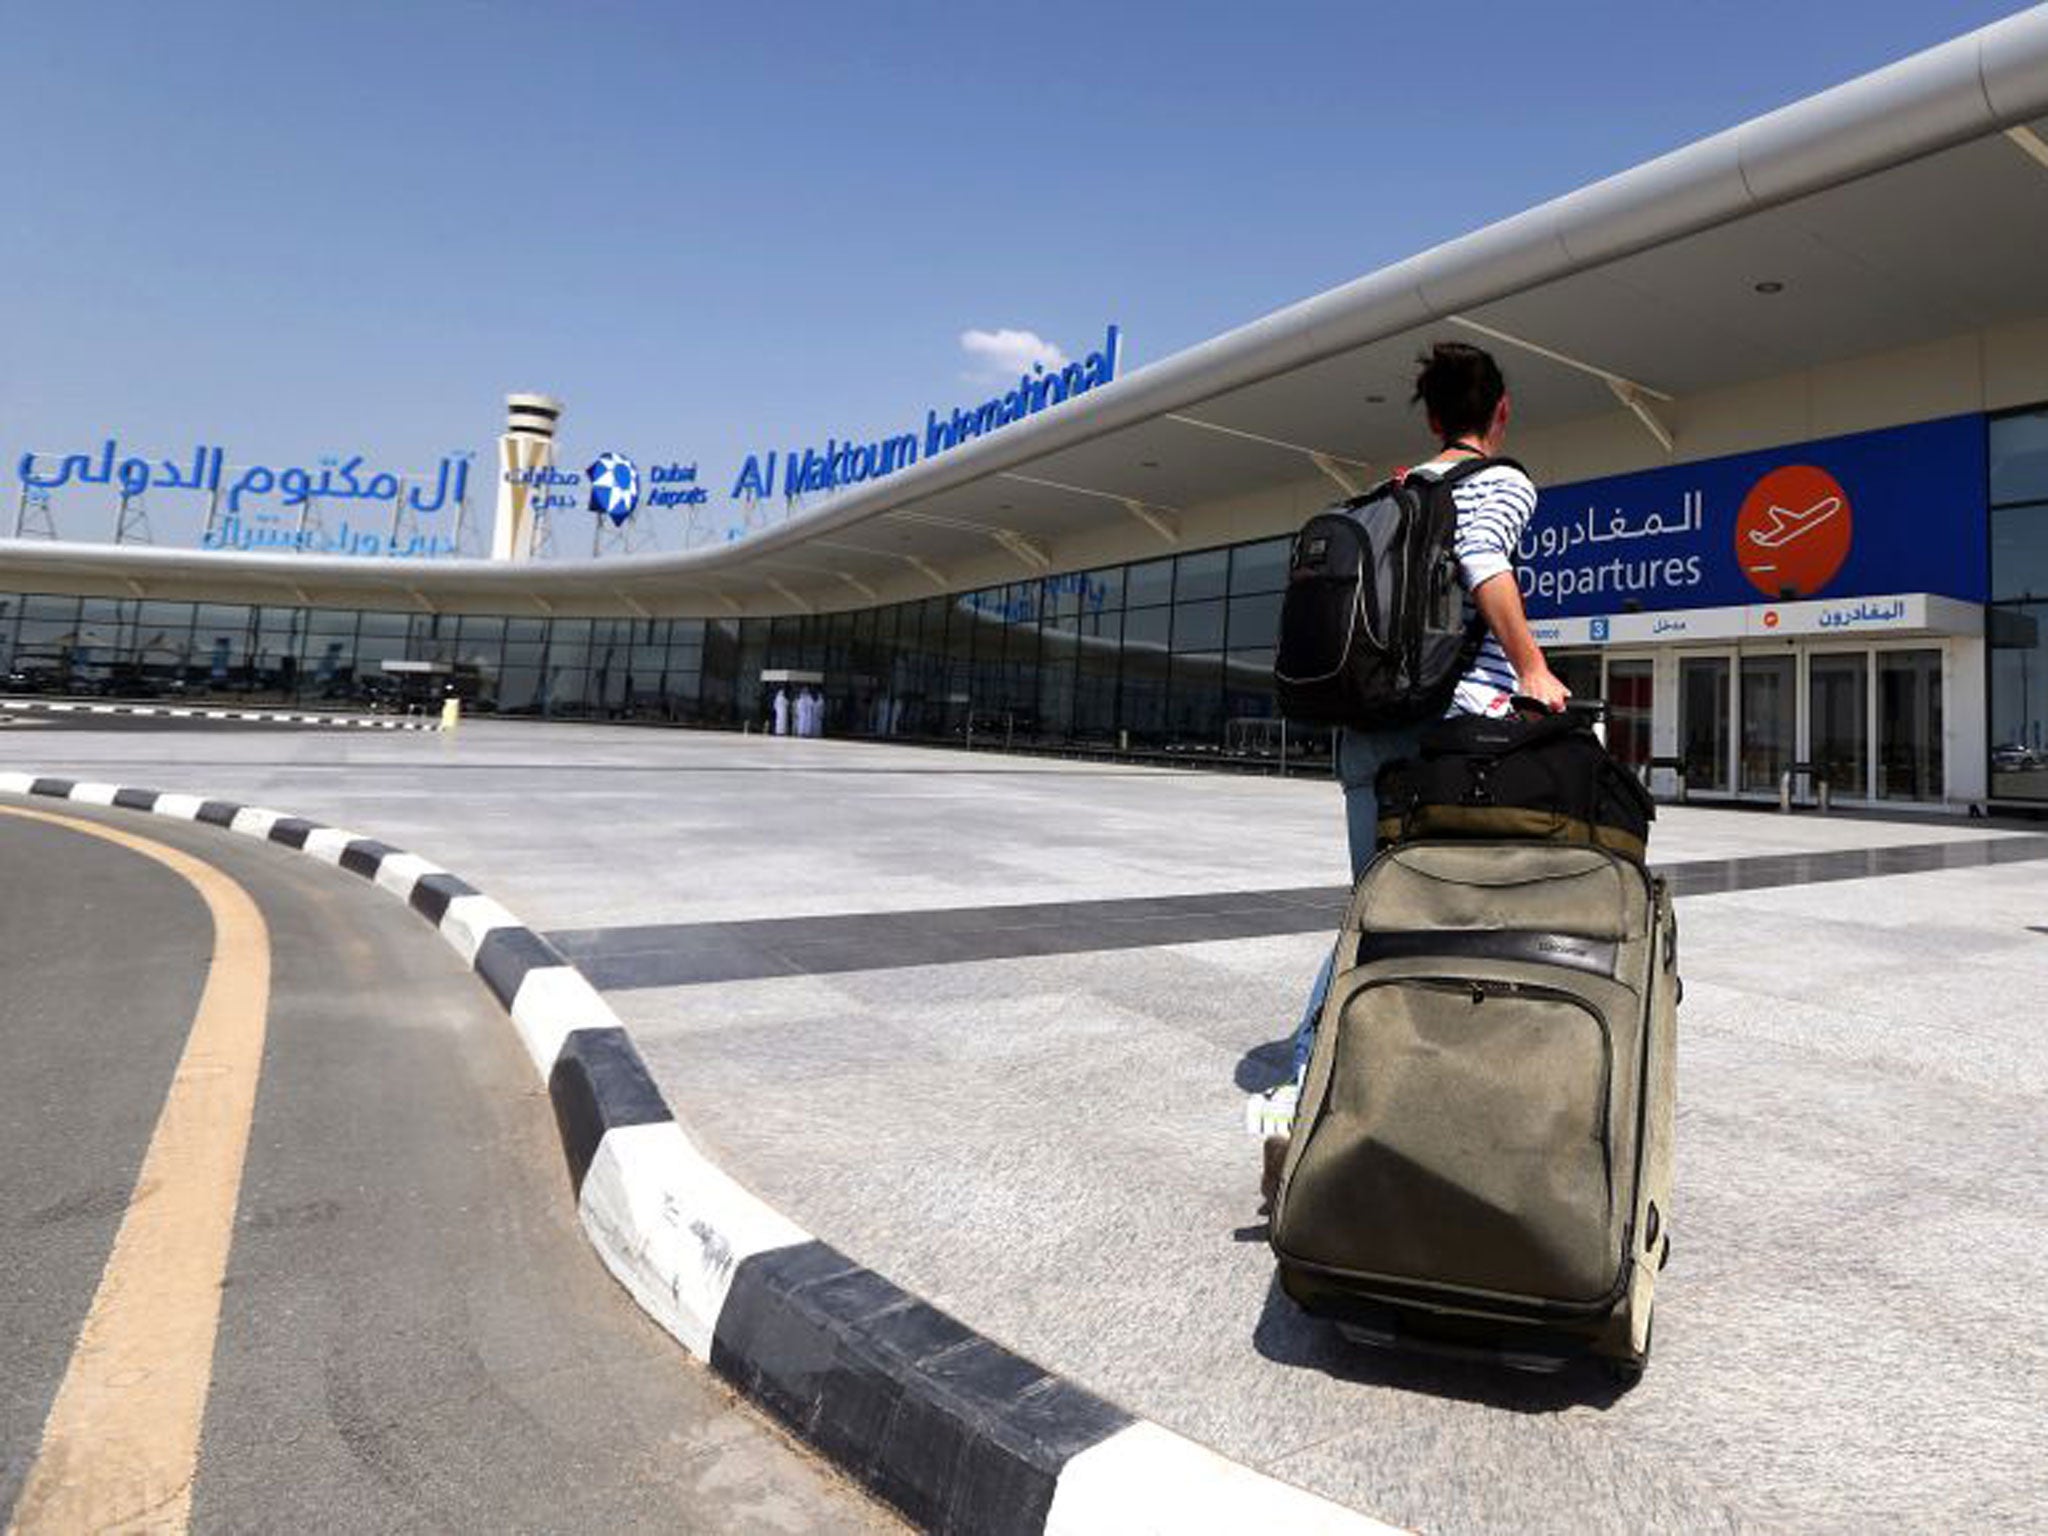 Go to gate: Dubai’s international airport could eclipse Heathrow